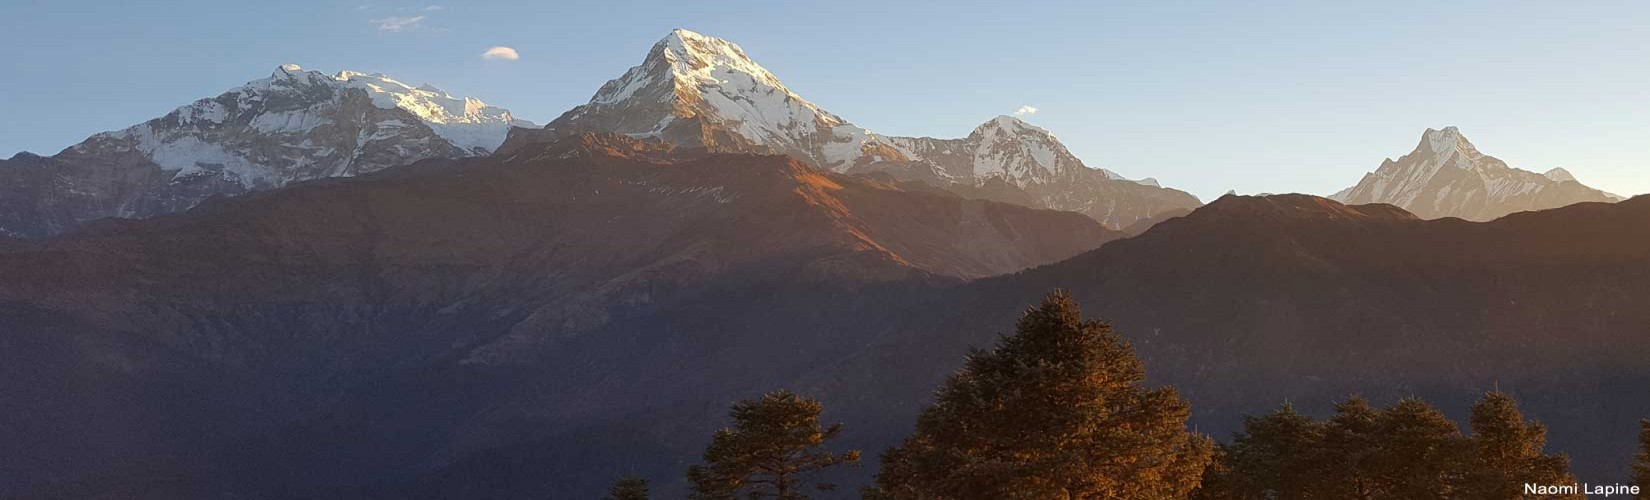 Himalayan range seen from Poon Hill of Ghorepani trek